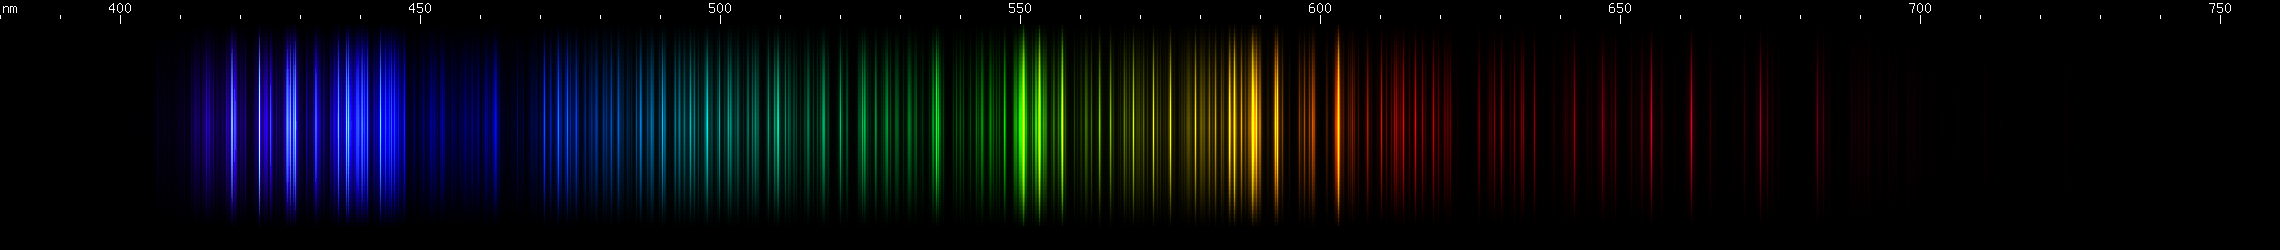 Spectral lines of Molybdenum.